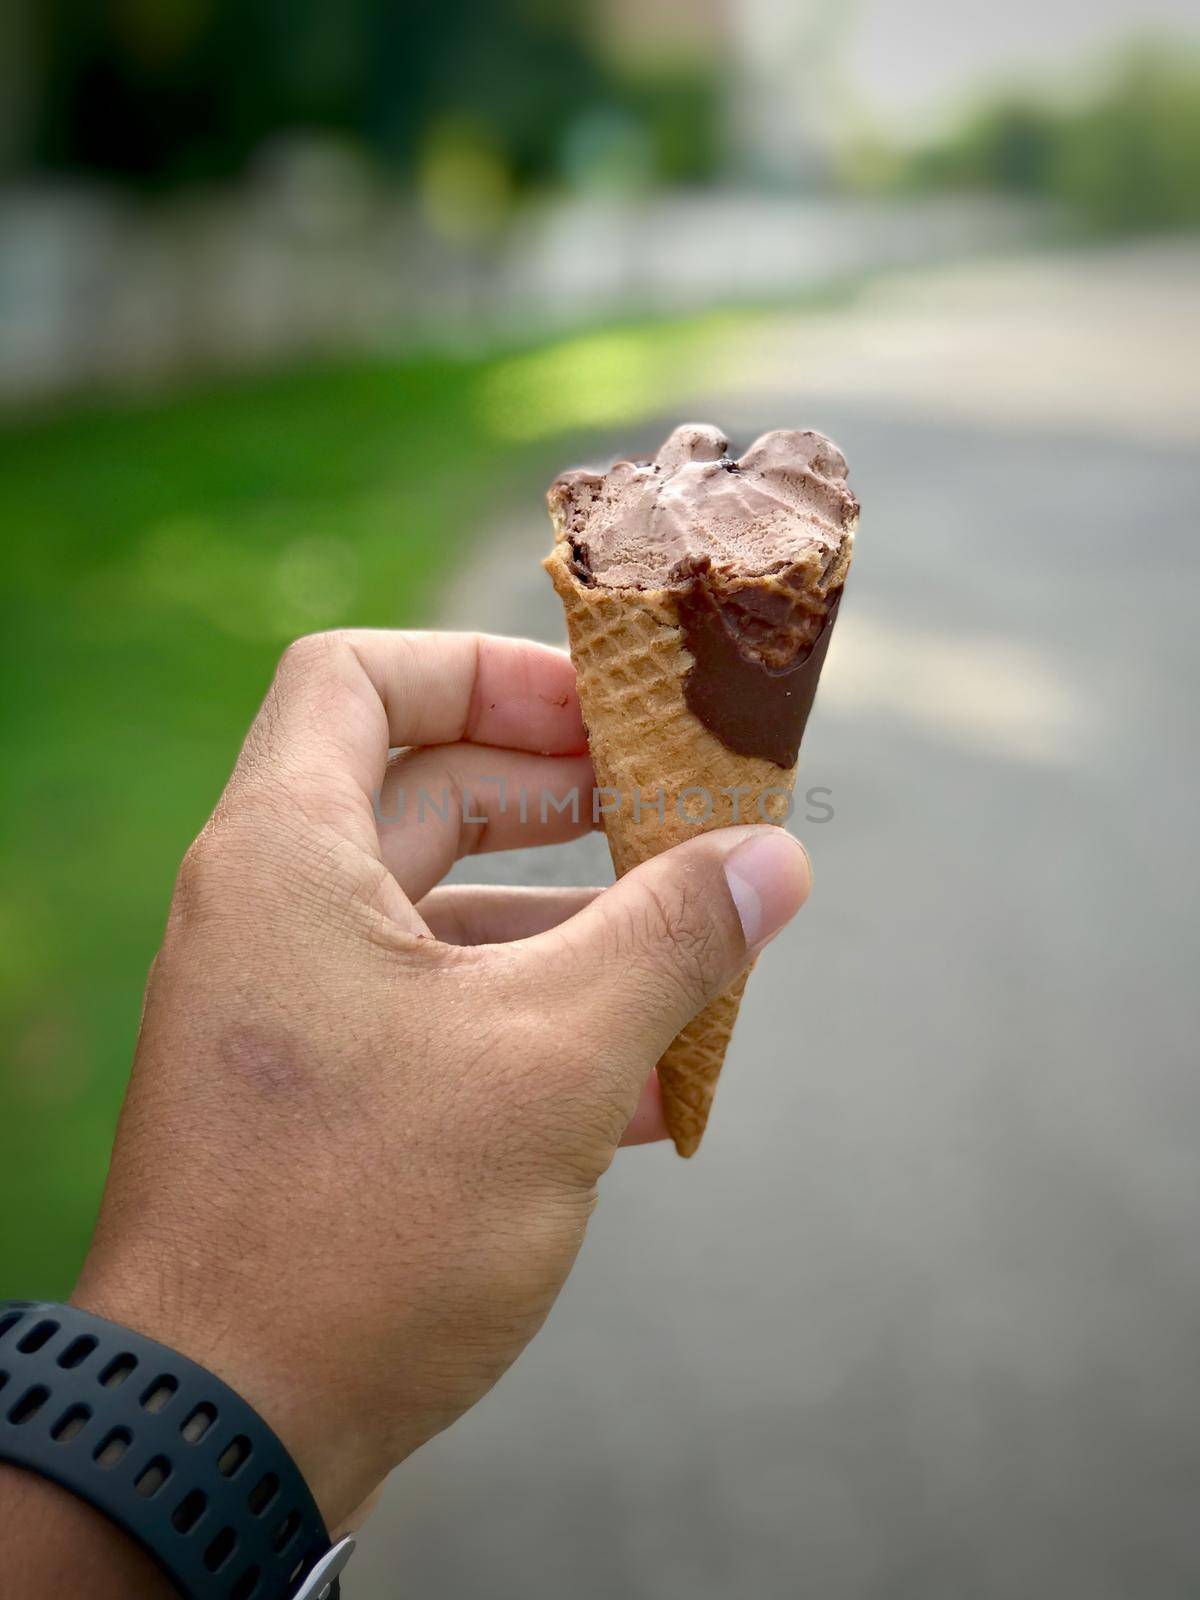 Hand holding ice cream with defocus nature background. Summer season.